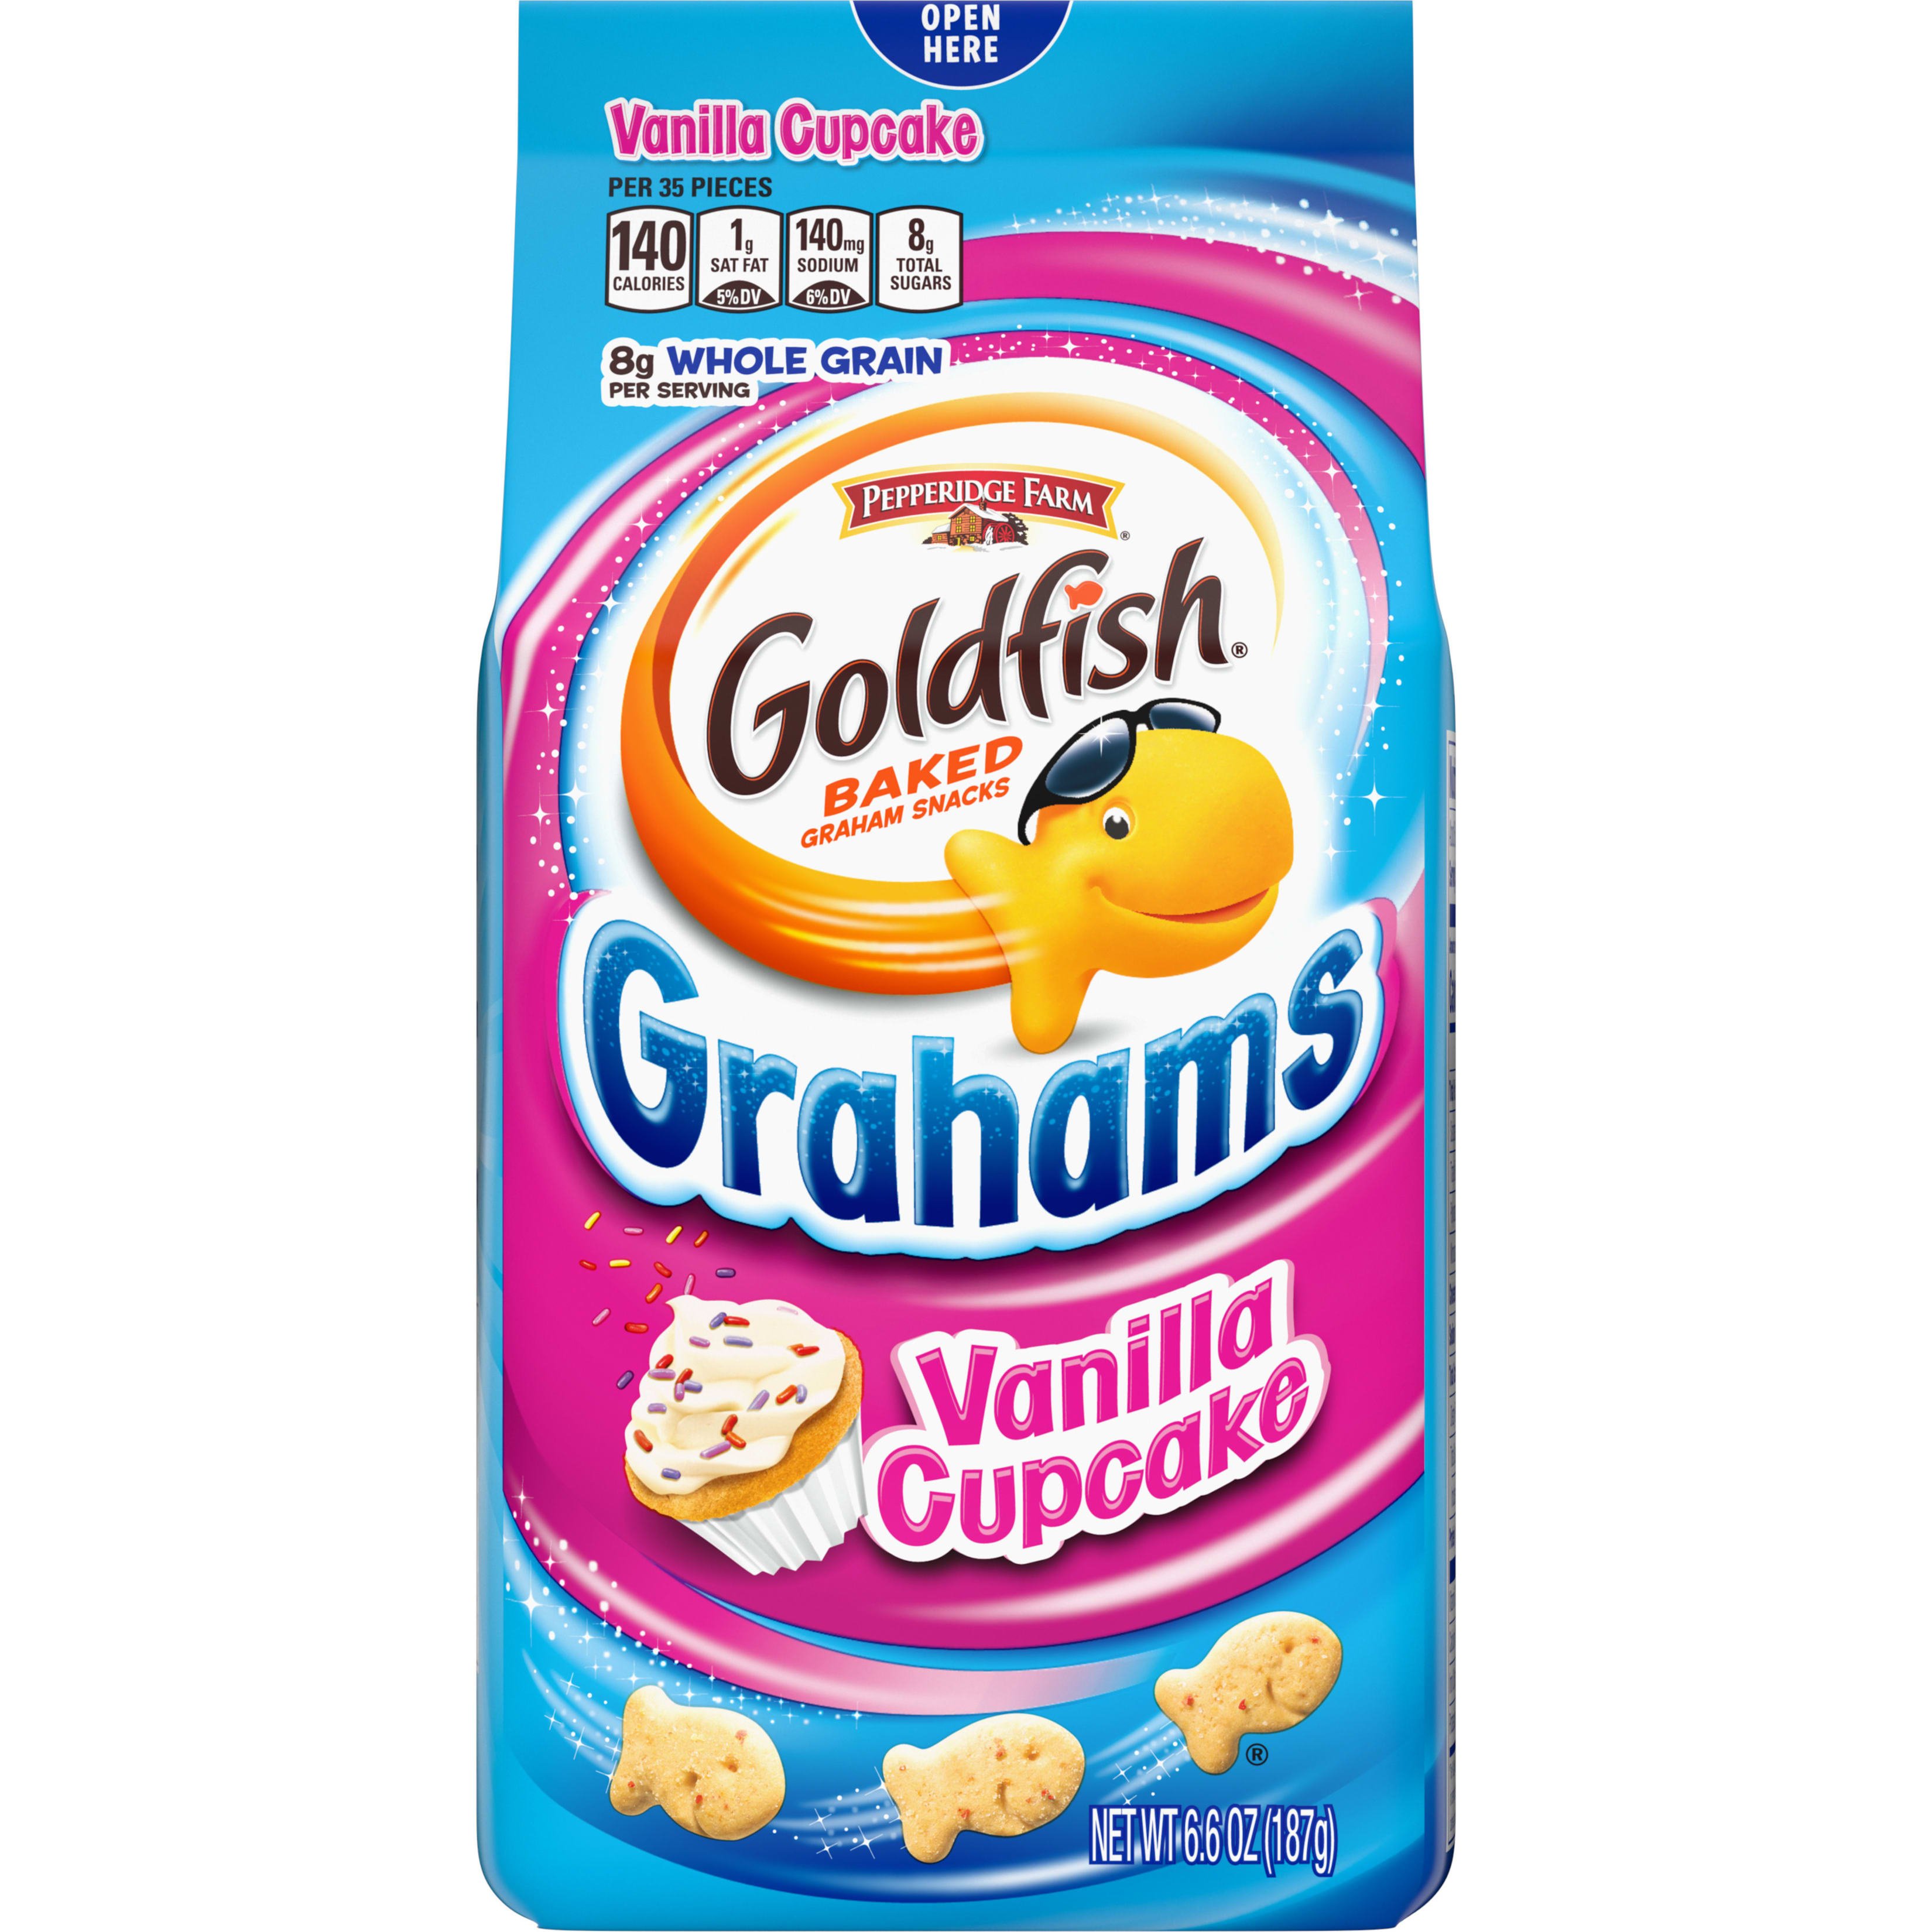 Goldfish Grahams Vanilla Cupcake Crackers Snack Crackers - Shop Cookies at H-E-B